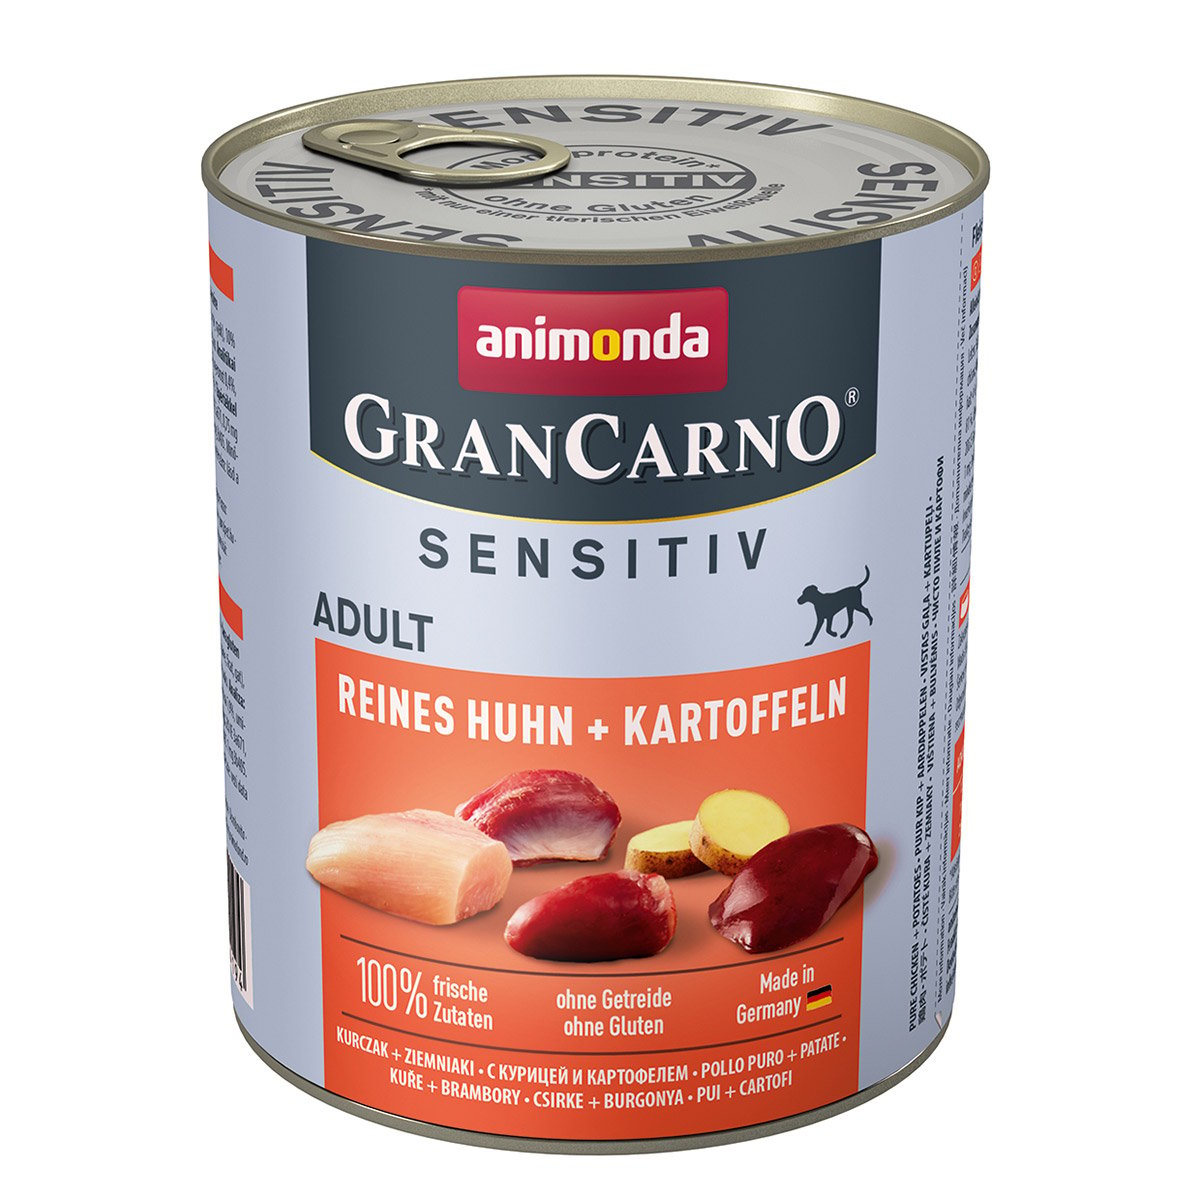 animonda grancarno adult sensitiv reines huhn kartoffeln 800g